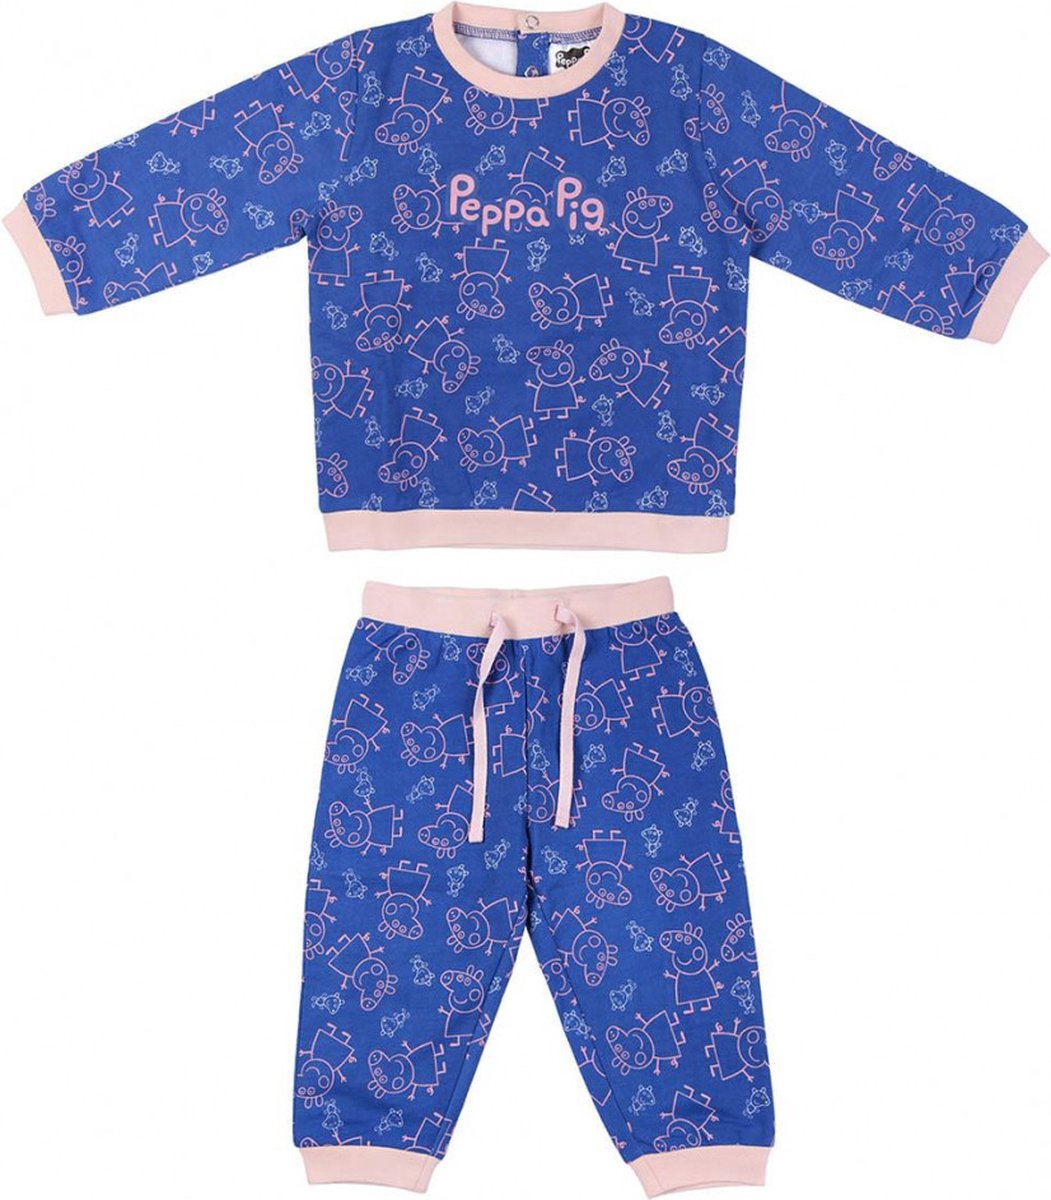 Original Peppa Pig trainingspak newborn kledingset - baby kids - maat 68 cm - 6 maanden - katoen set broekje trui Premium